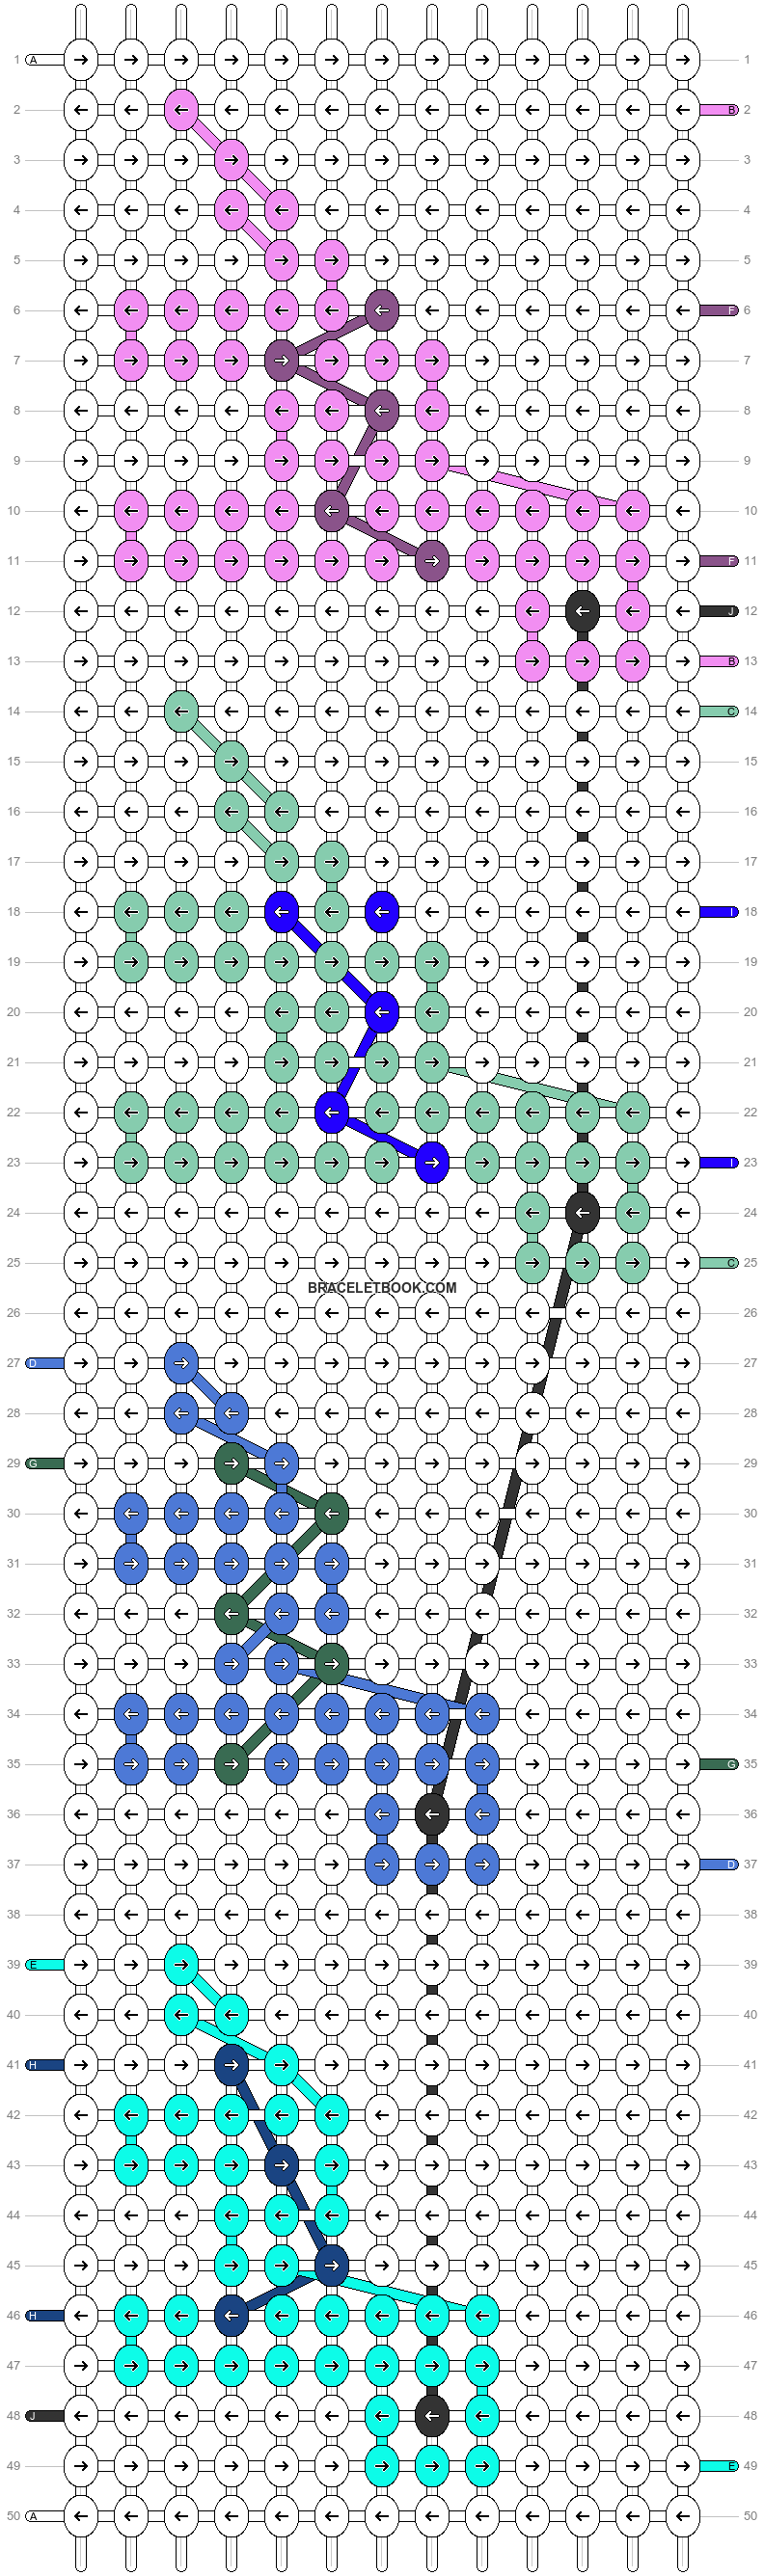 Alpha pattern #72862 variation #151528 pattern